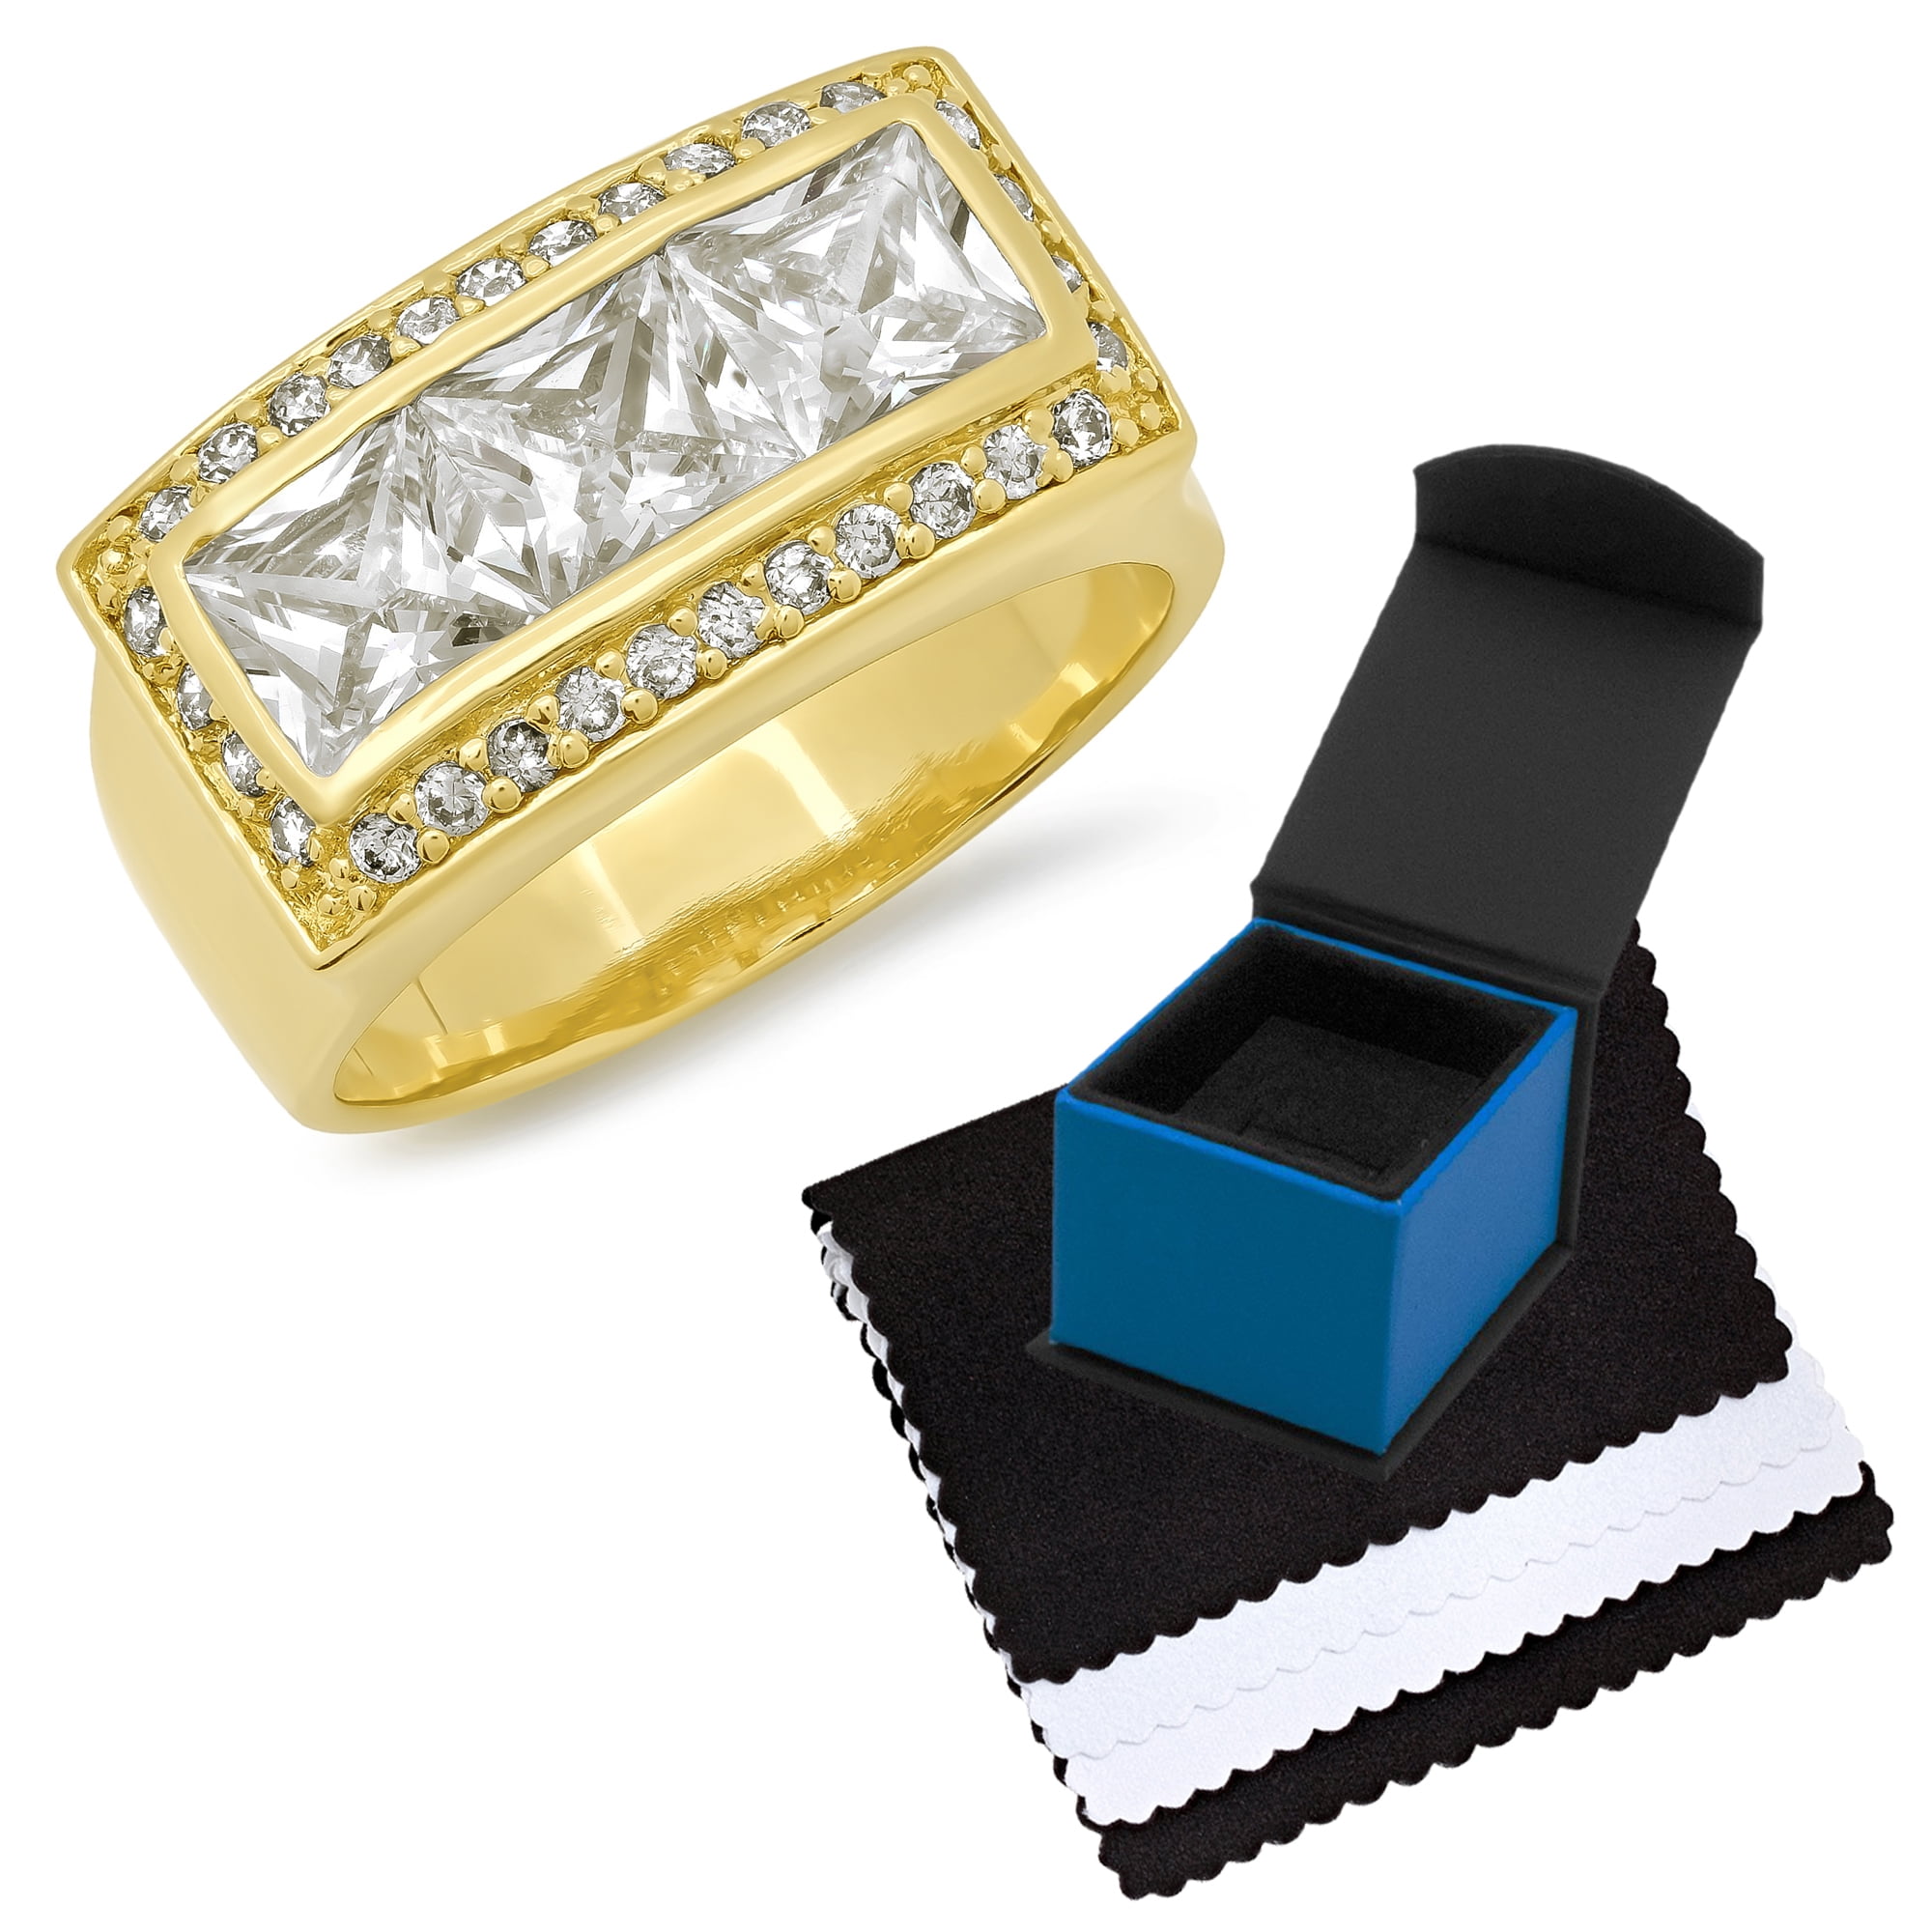 Buy Imperial 22 Karat Gold Om Finger Ring at Best Price | Tanishq UAE